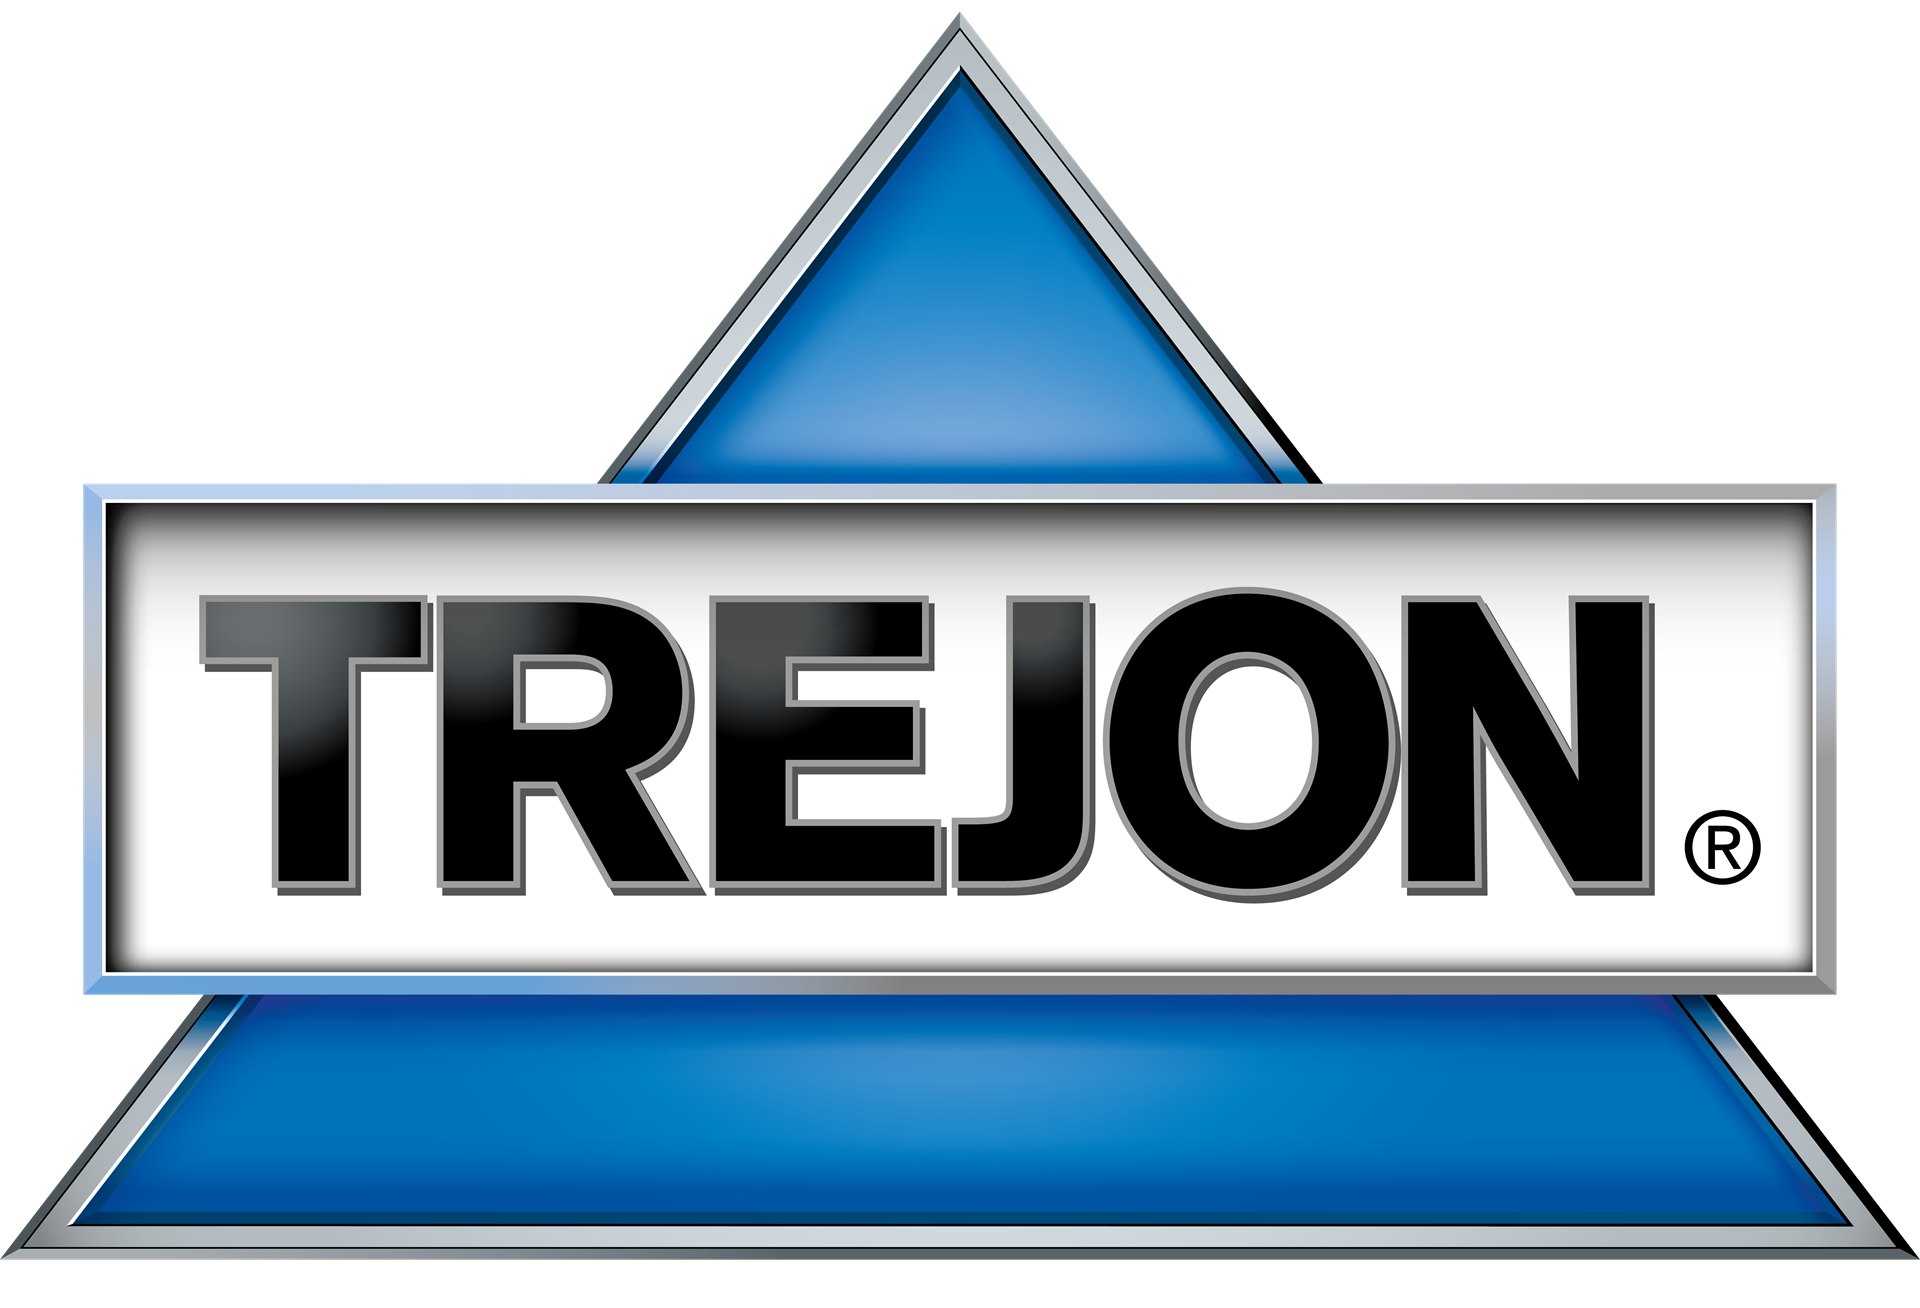 TREJON_logo